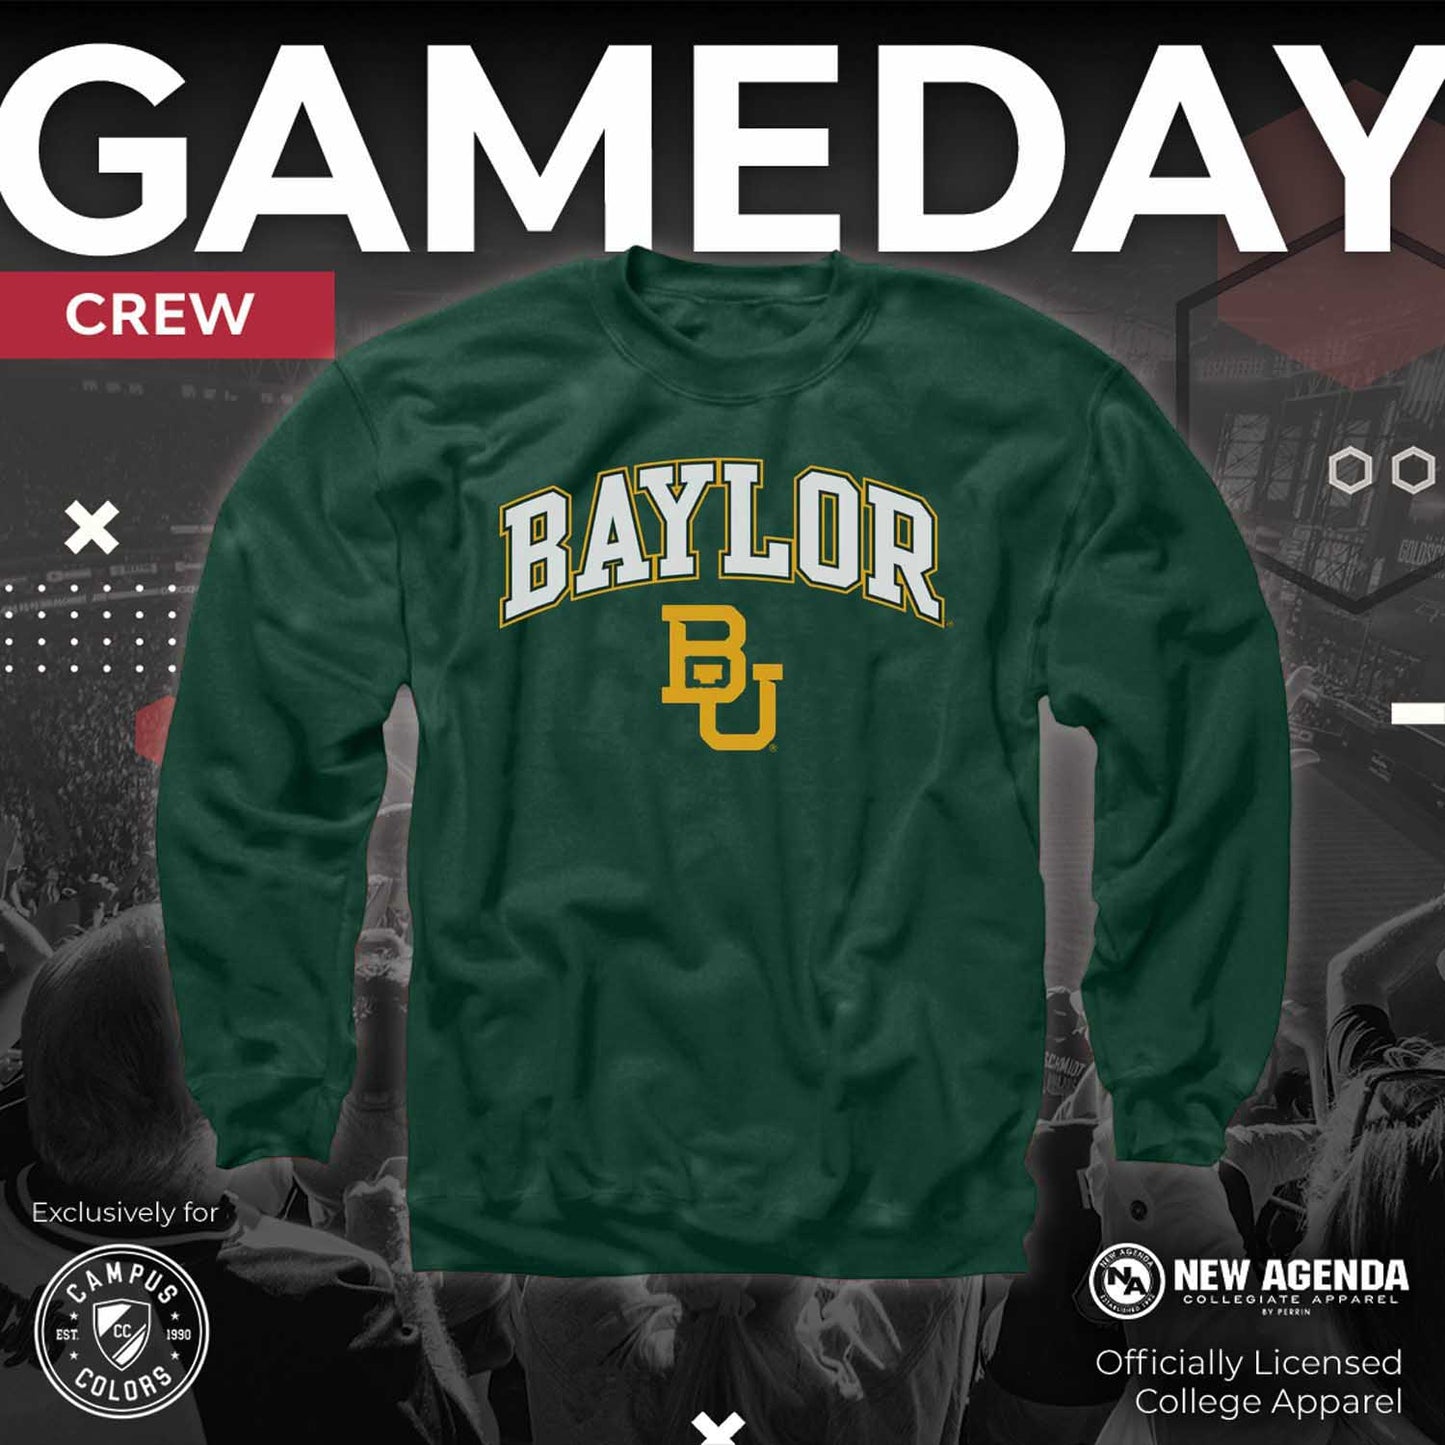 Baylor Bears Adult Arch & Logo Soft Style Gameday Crewneck Sweatshirt - Team Color